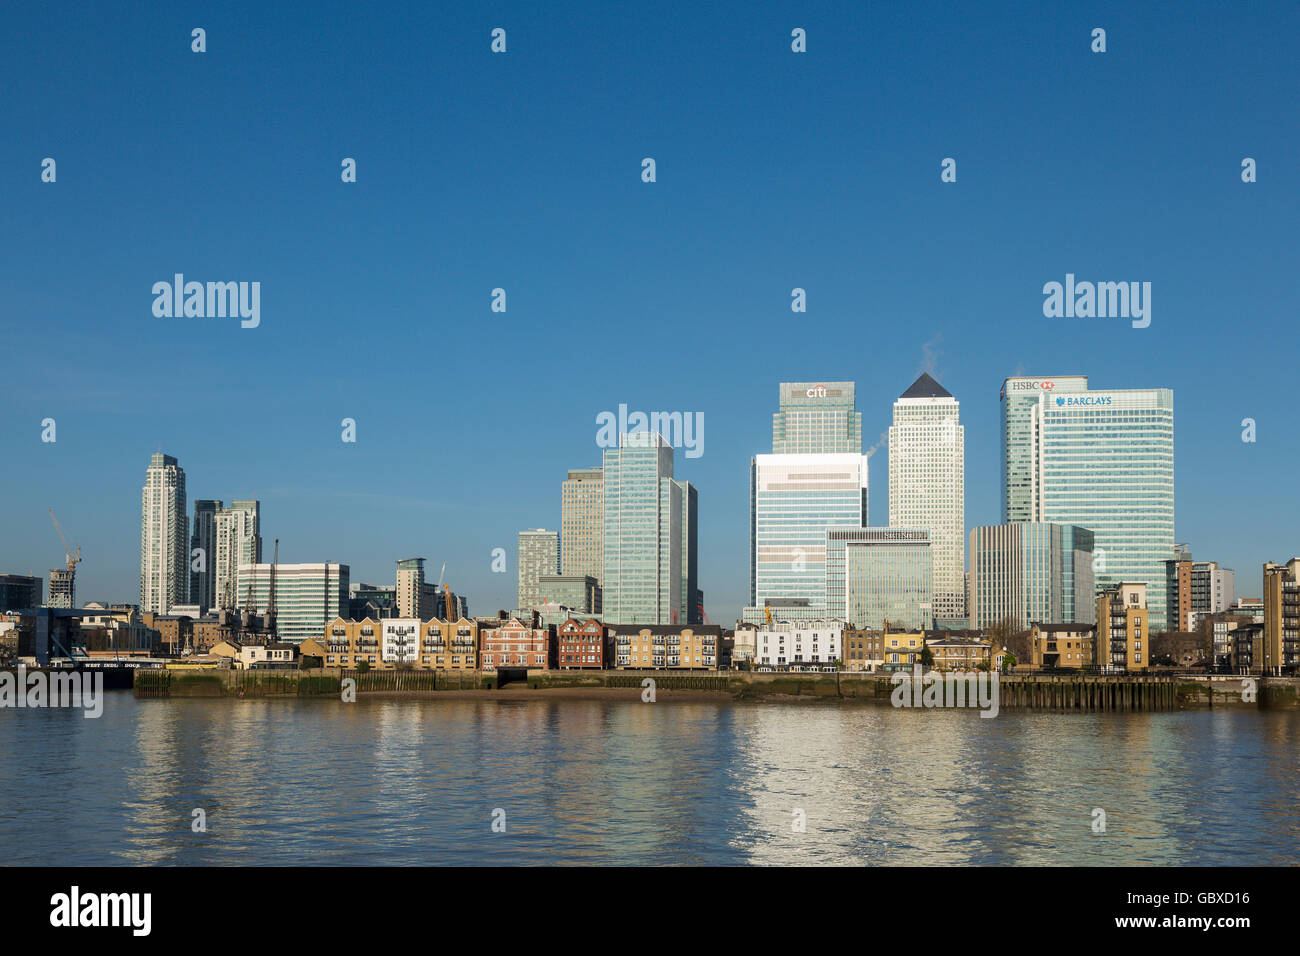 Quartier des affaires de Canary Wharf skyline, banques, Londres, Angleterre Banque D'Images